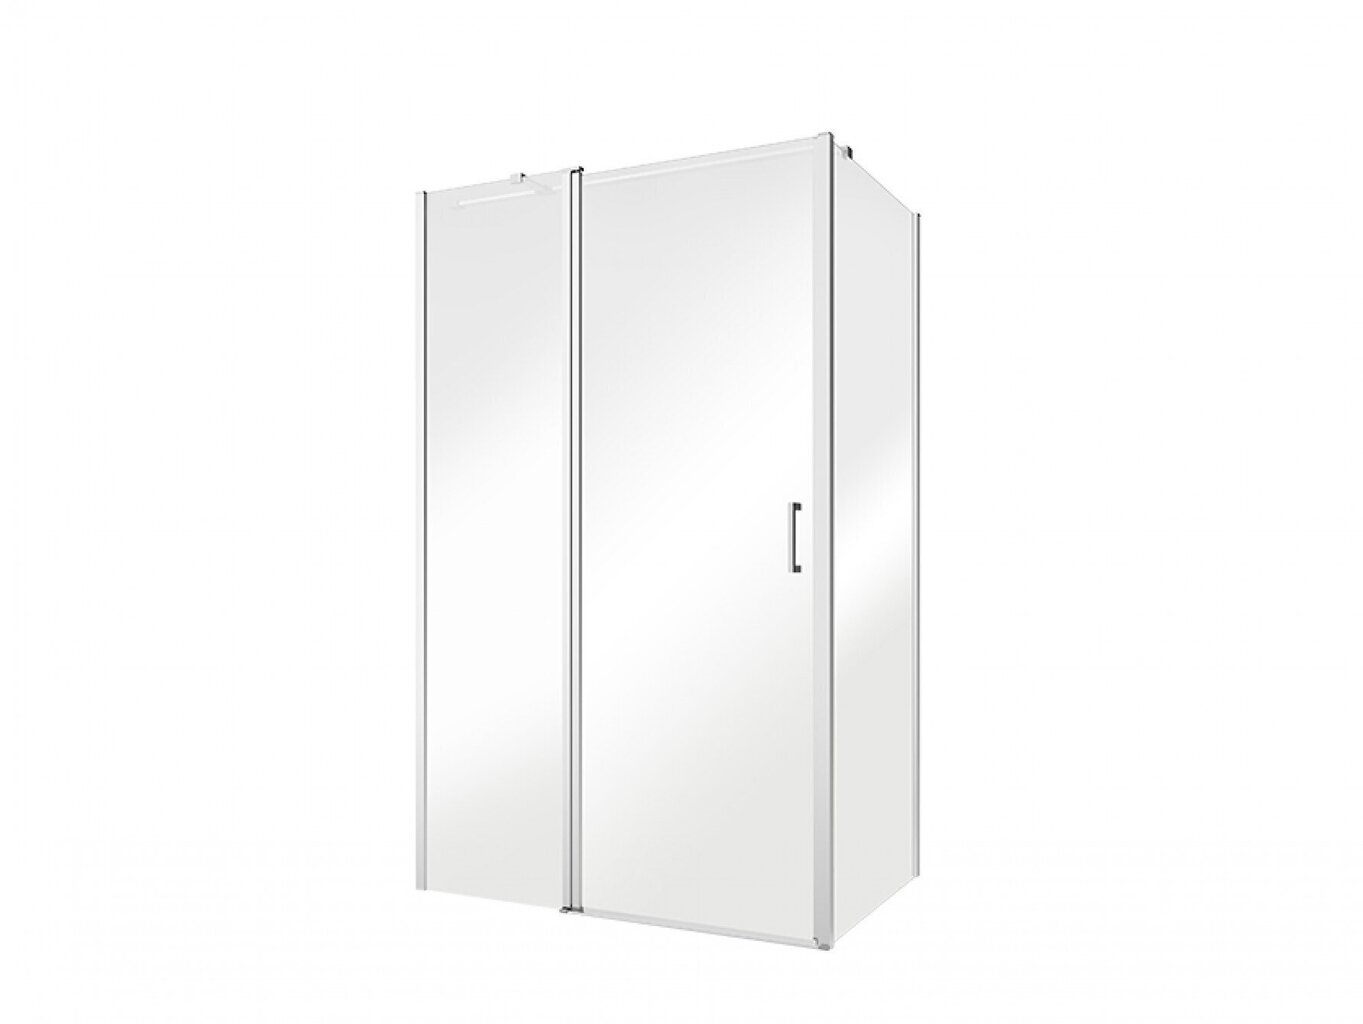 Dušas kabīne Besco Exo-CH, 100x80,90,100 cm цена и информация | Dušas kabīnes | 220.lv